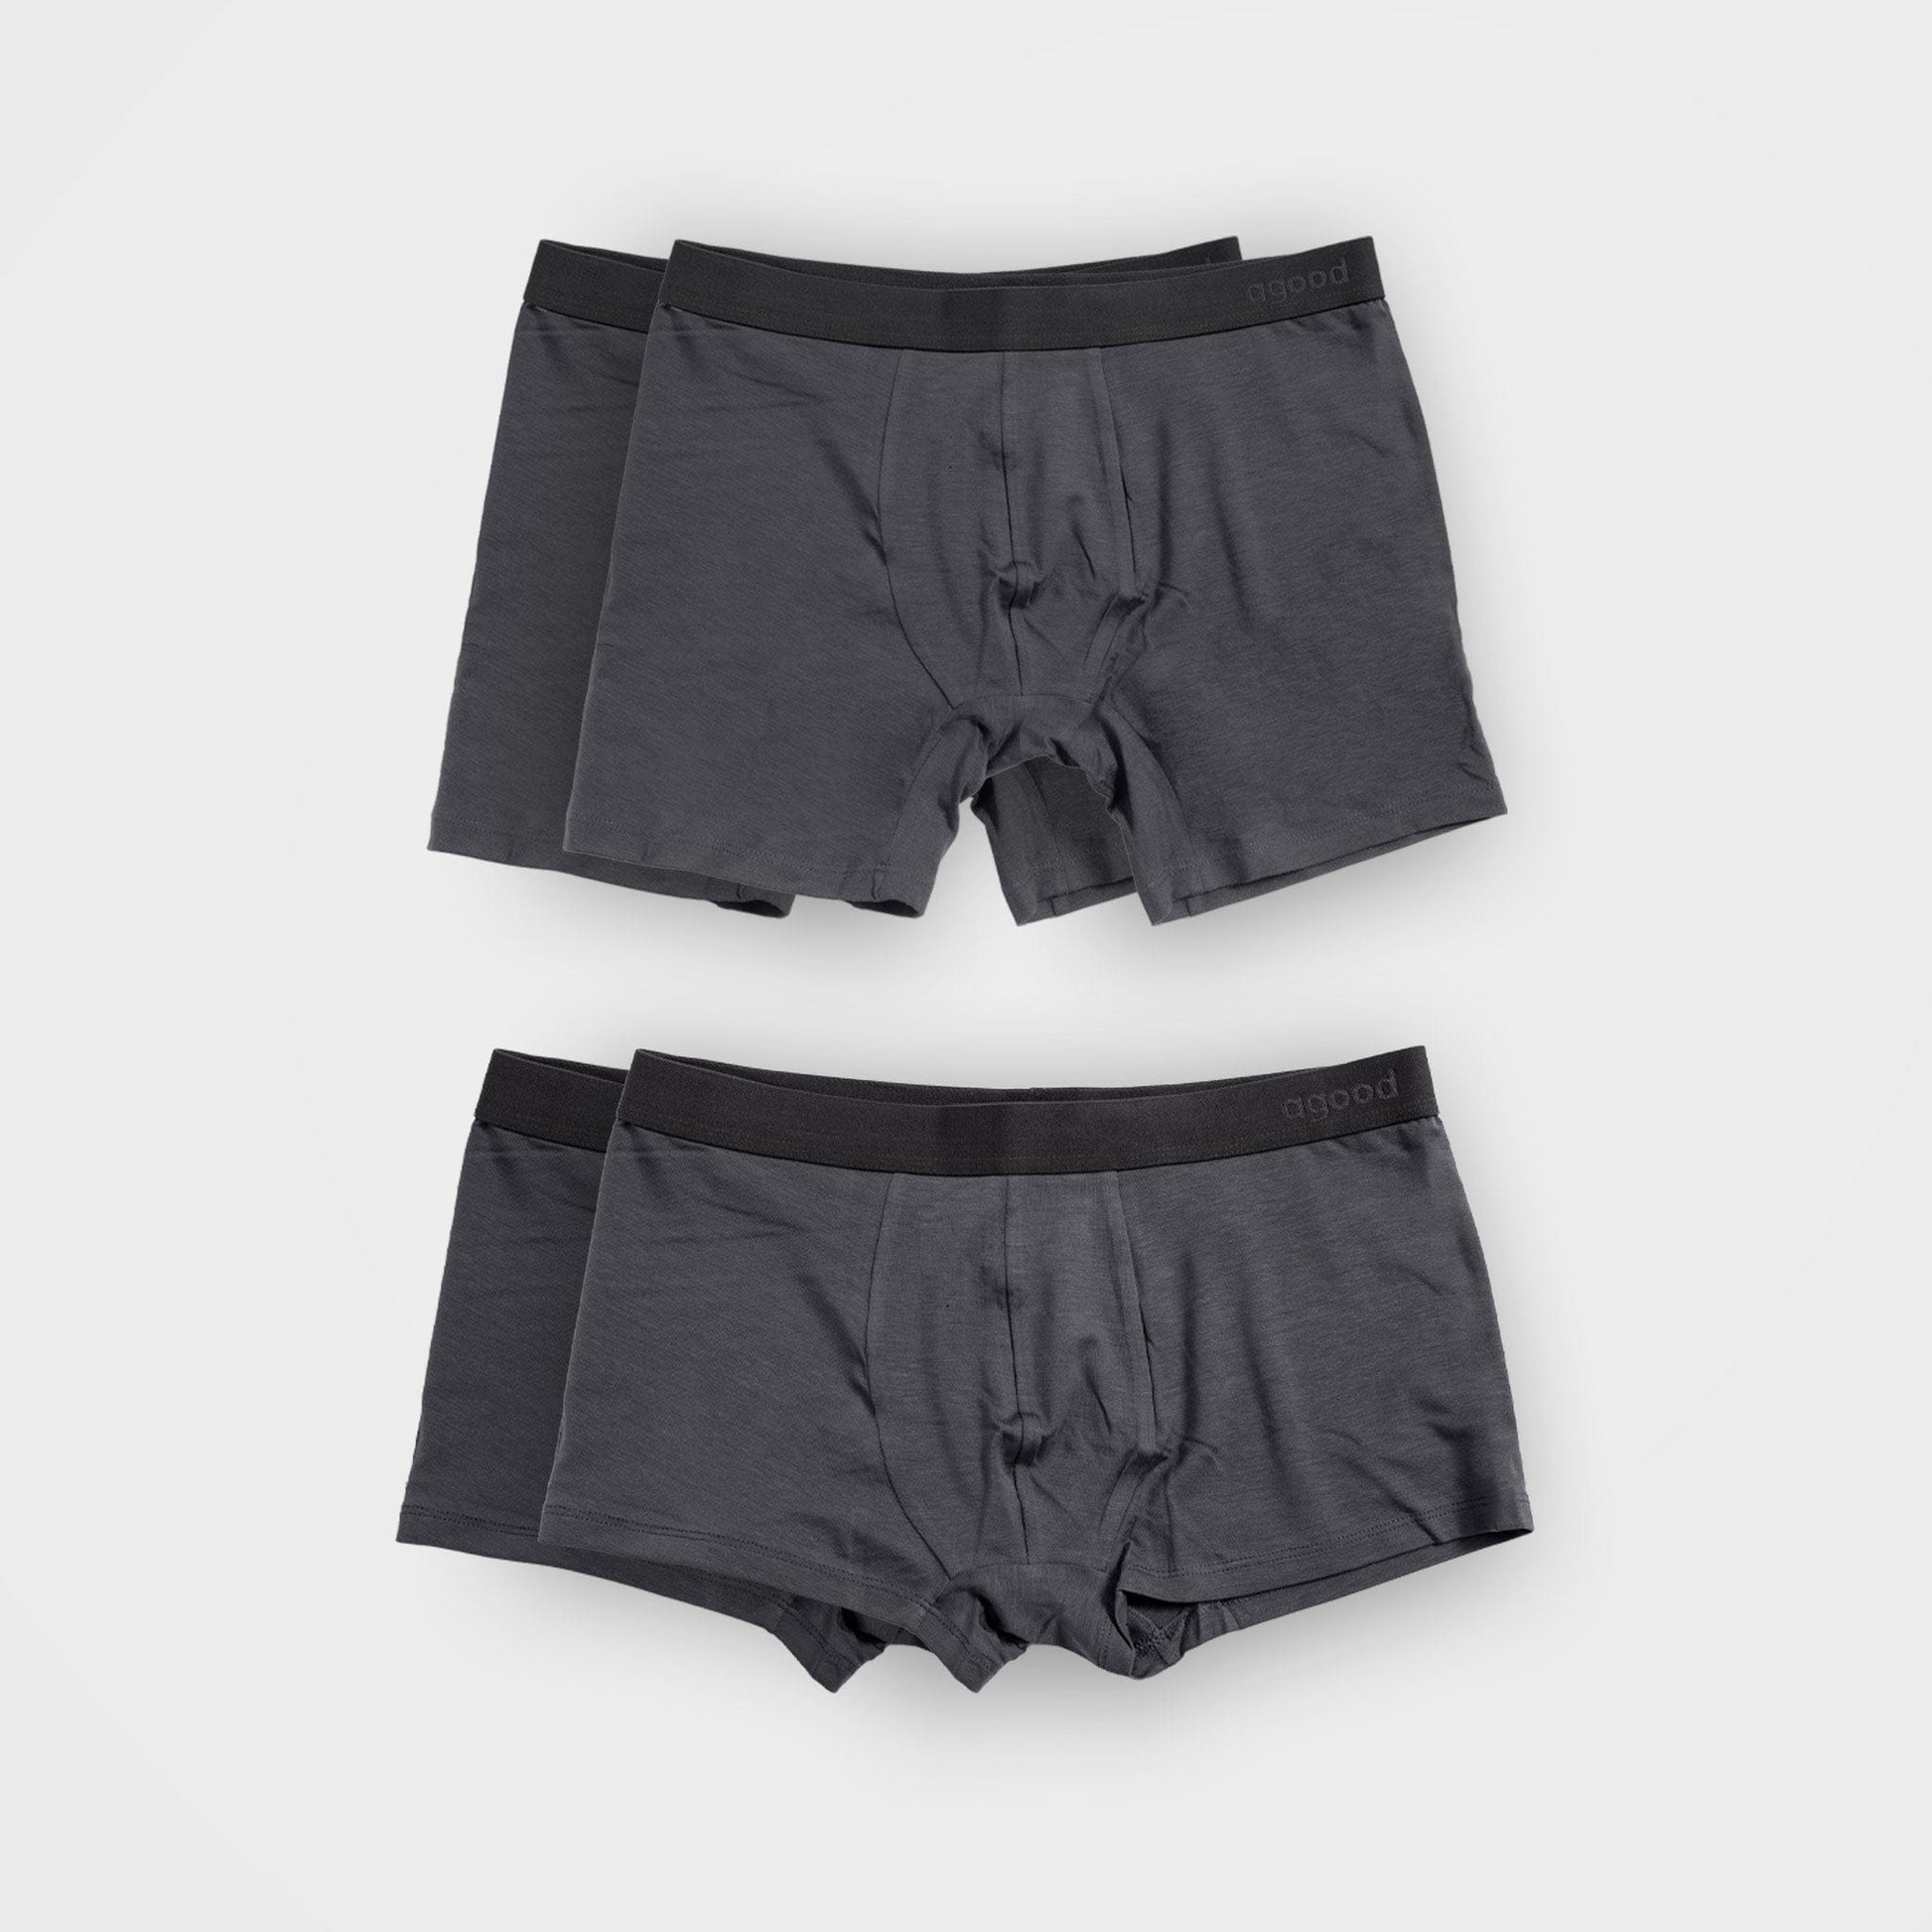 4 Pack Men's Charcoal Underwear - Boxer Brief & Trunk